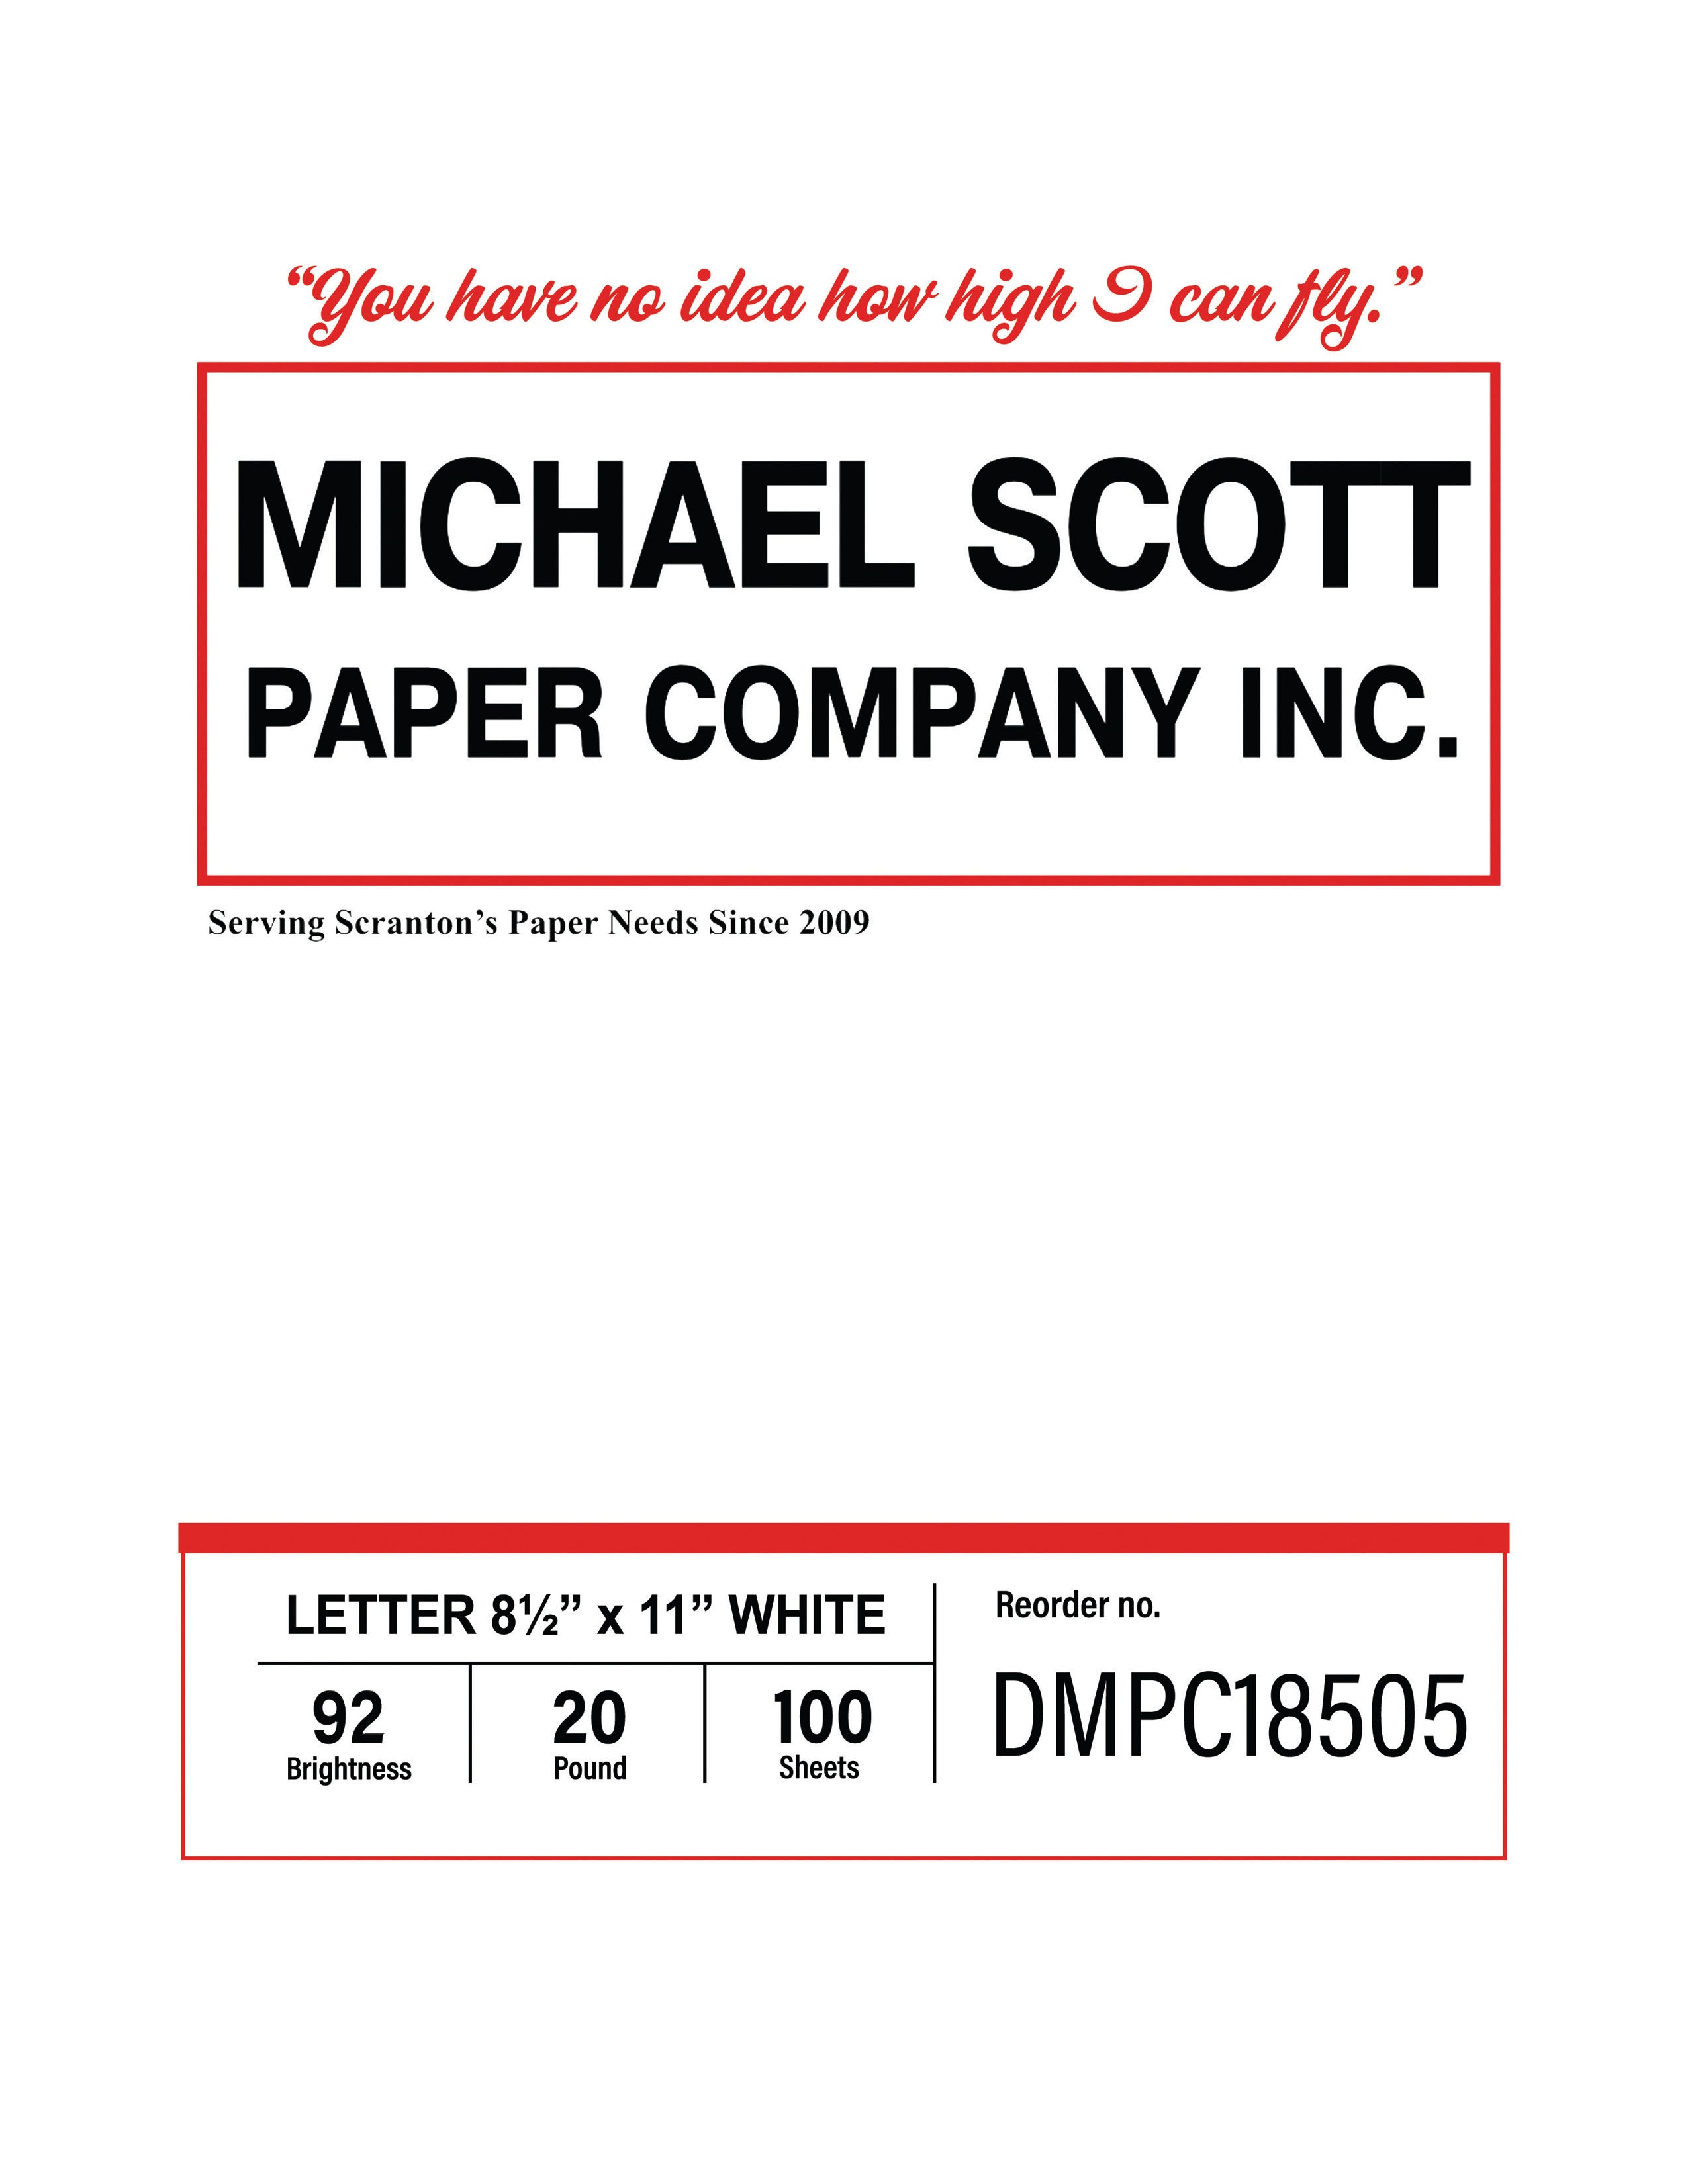 The Office Dunder Mifflin Inc. Paper Company Premium Copy Prop